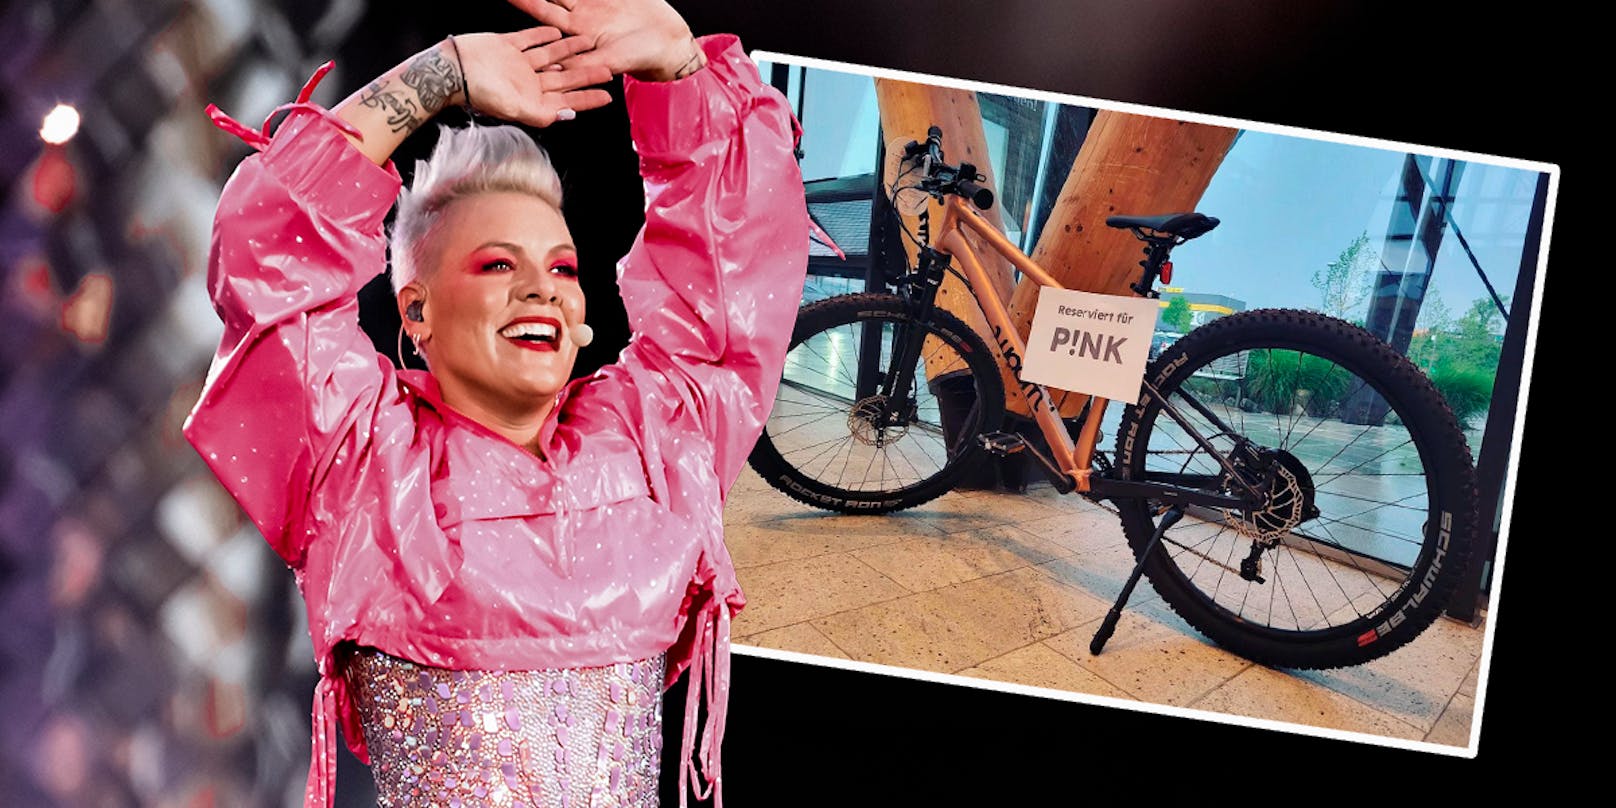 NÖ-Start-Up hilft Superstar Pink aus der Fahrrad-Klemme